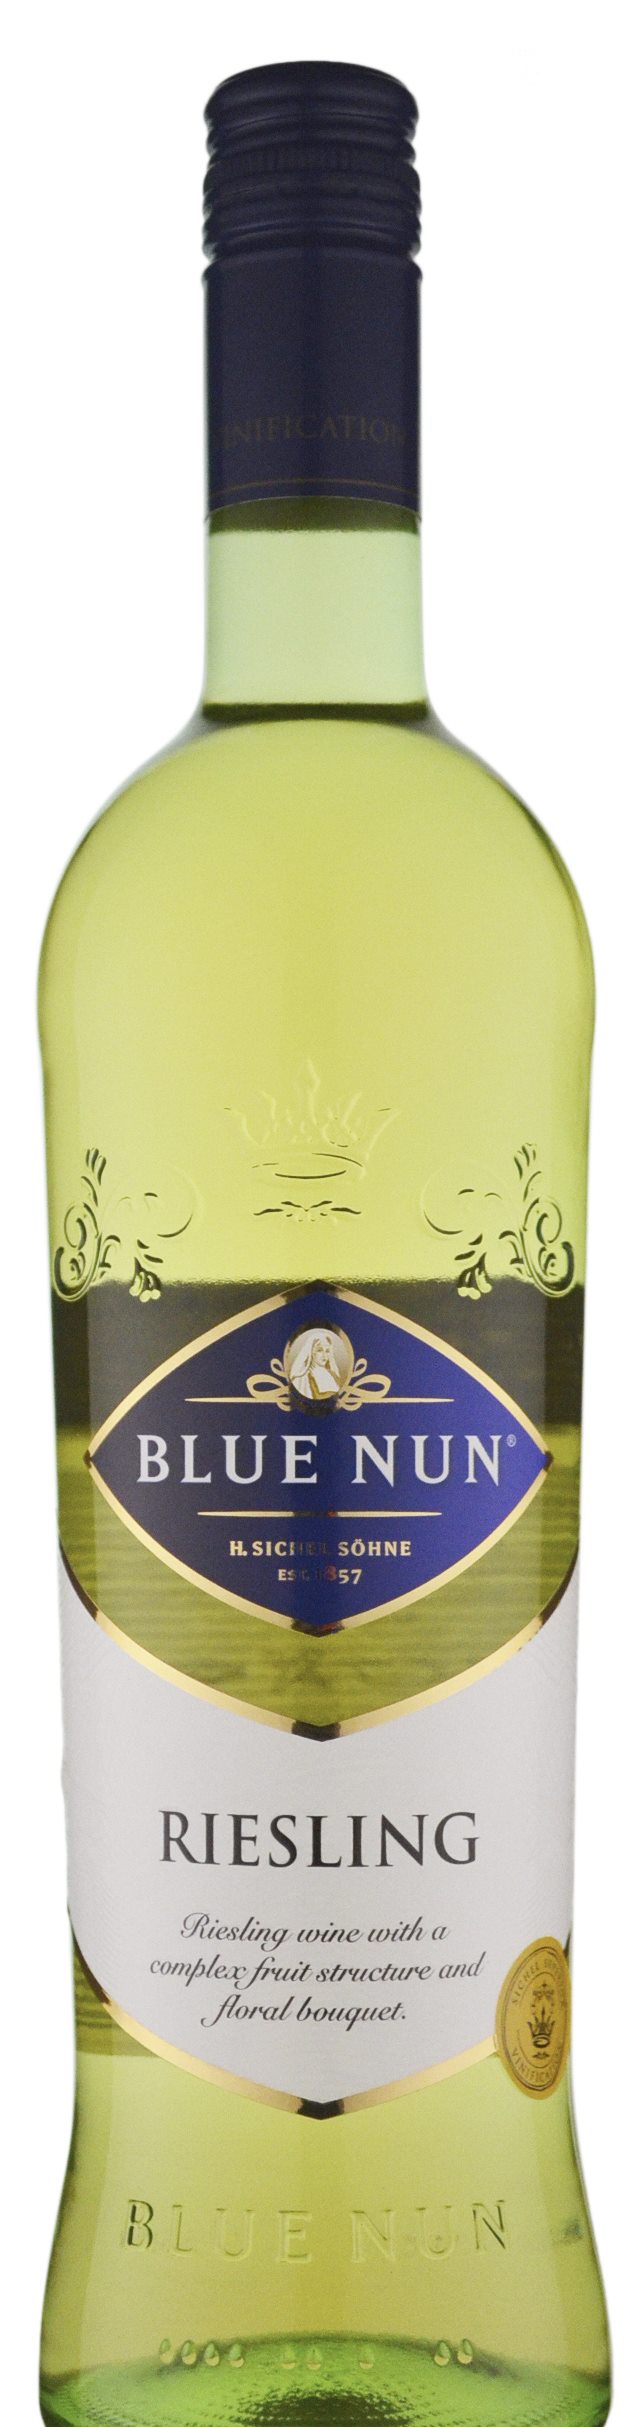 Blue Nun Riesling 2015